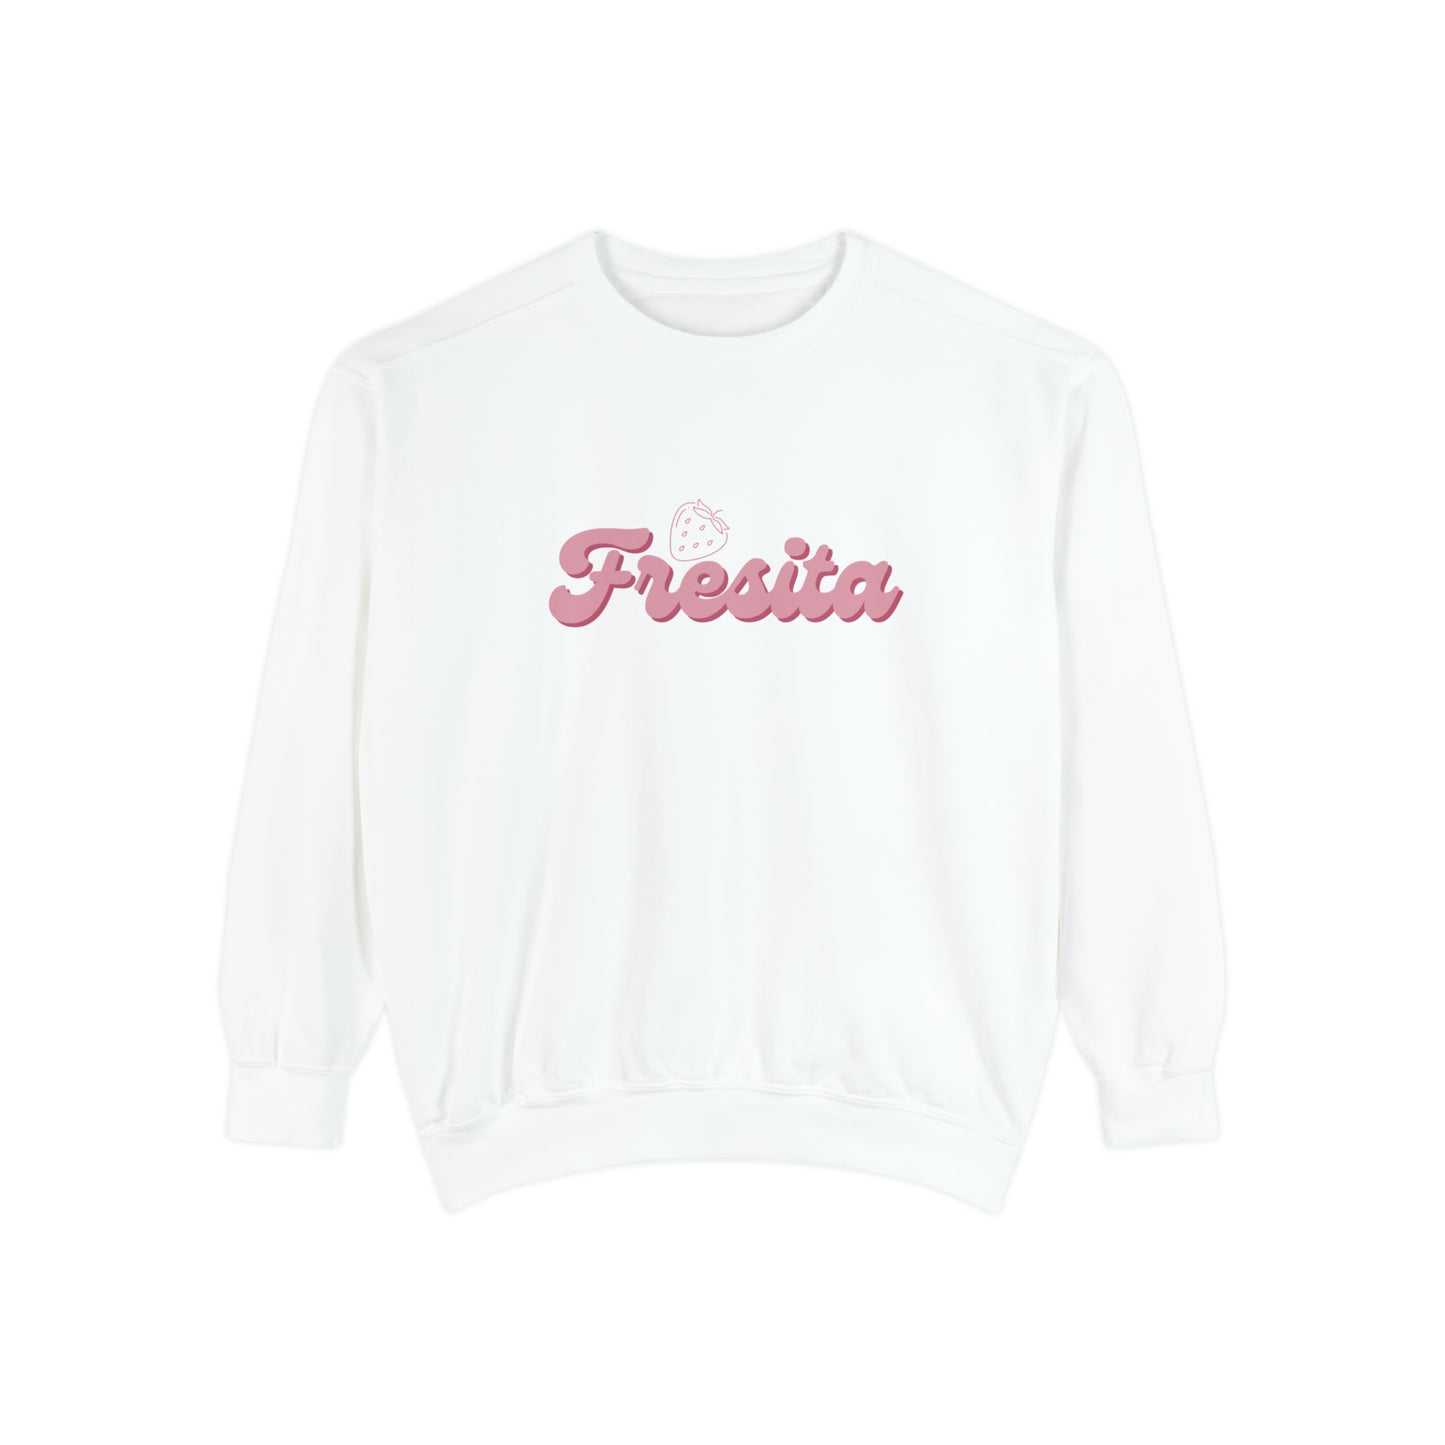 Fresita Sudadera Unisex Garment-Dyed Sweatshirt